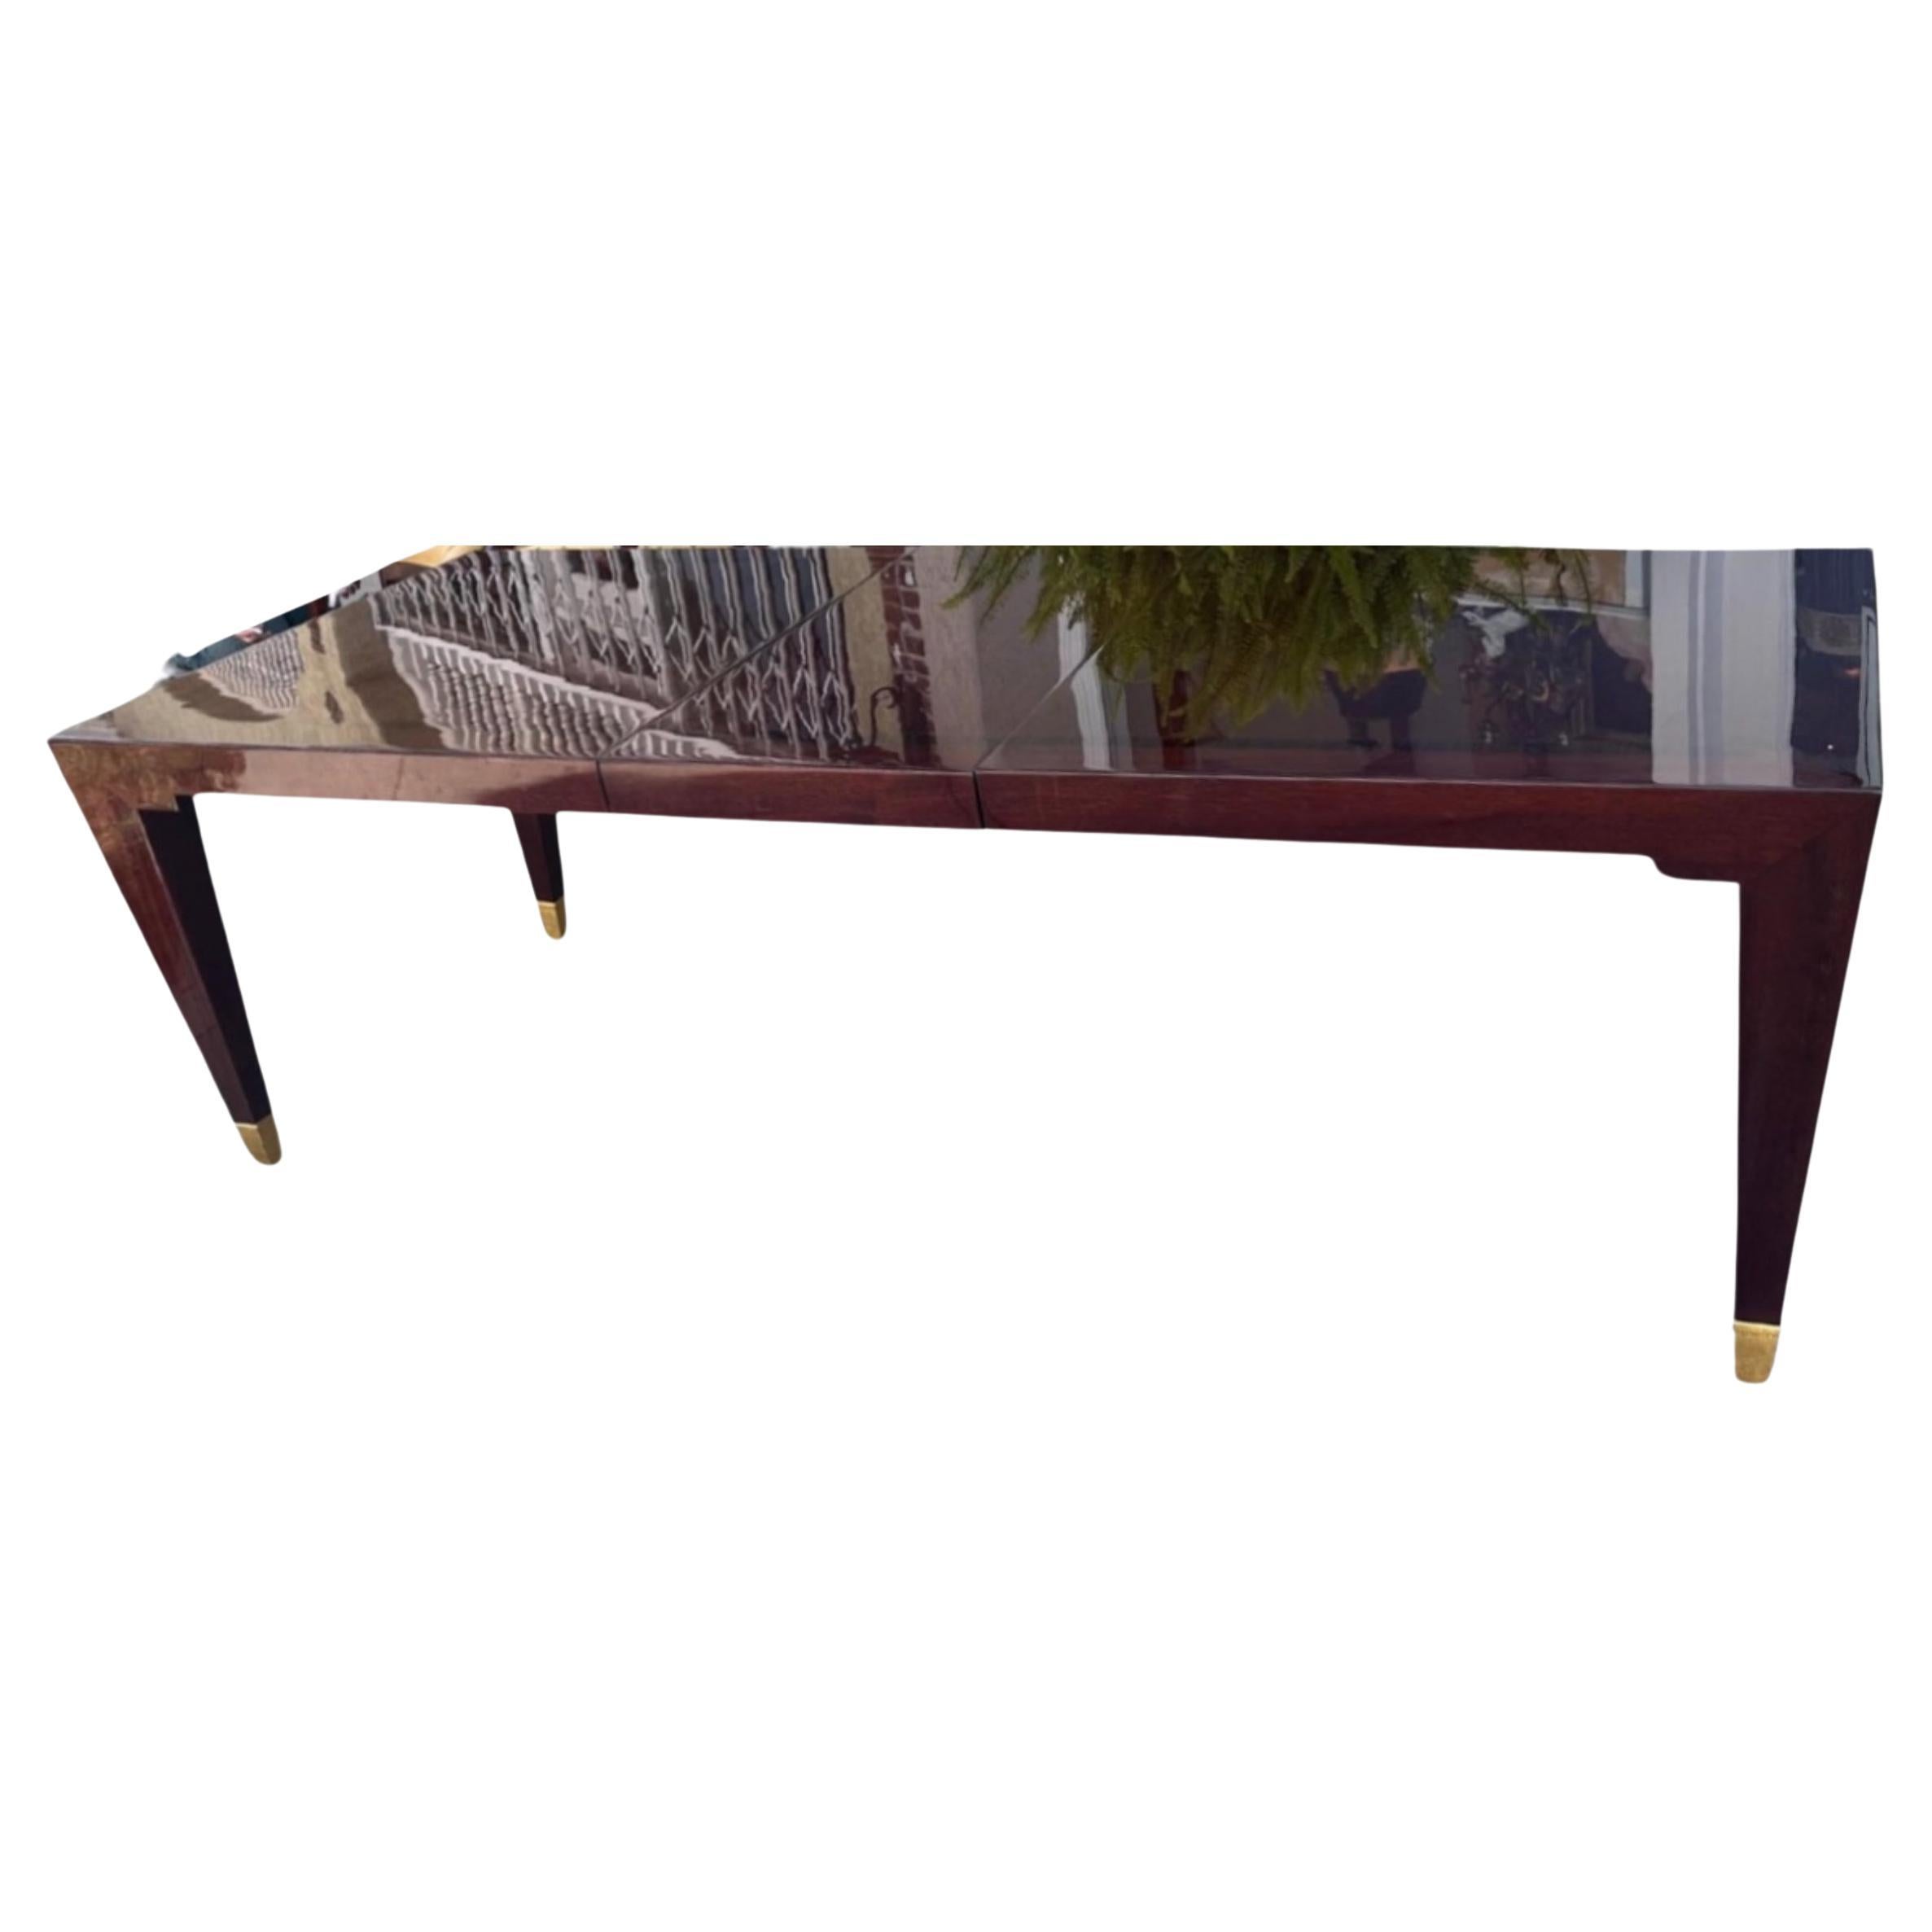 J. Robert Scott Art Deco Style Moderne Dining Table For Sale